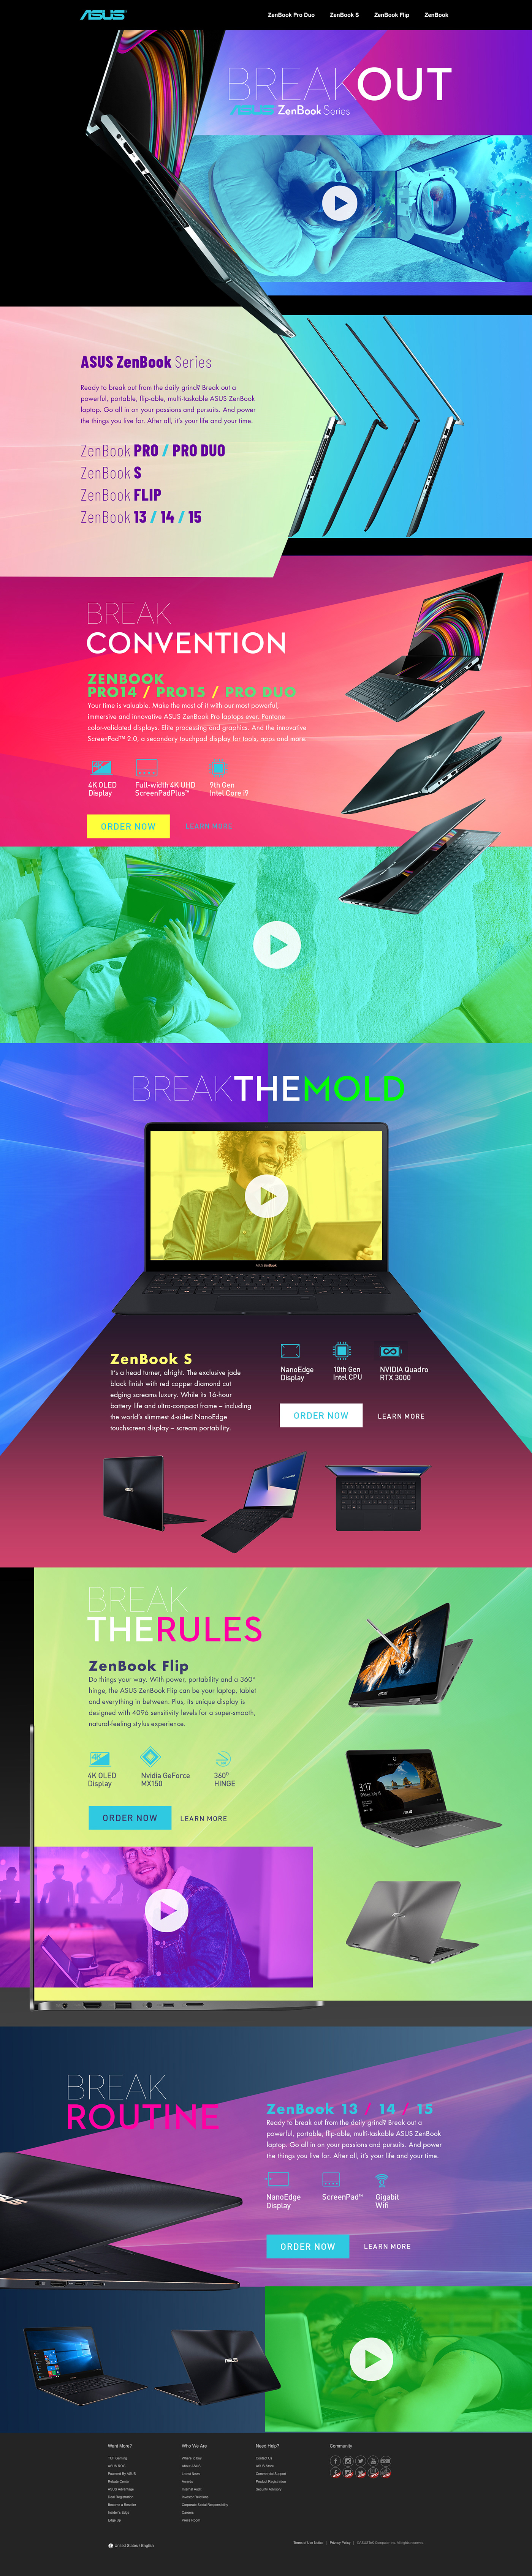 asus color colorful Computer Laptop Technology Webdesign